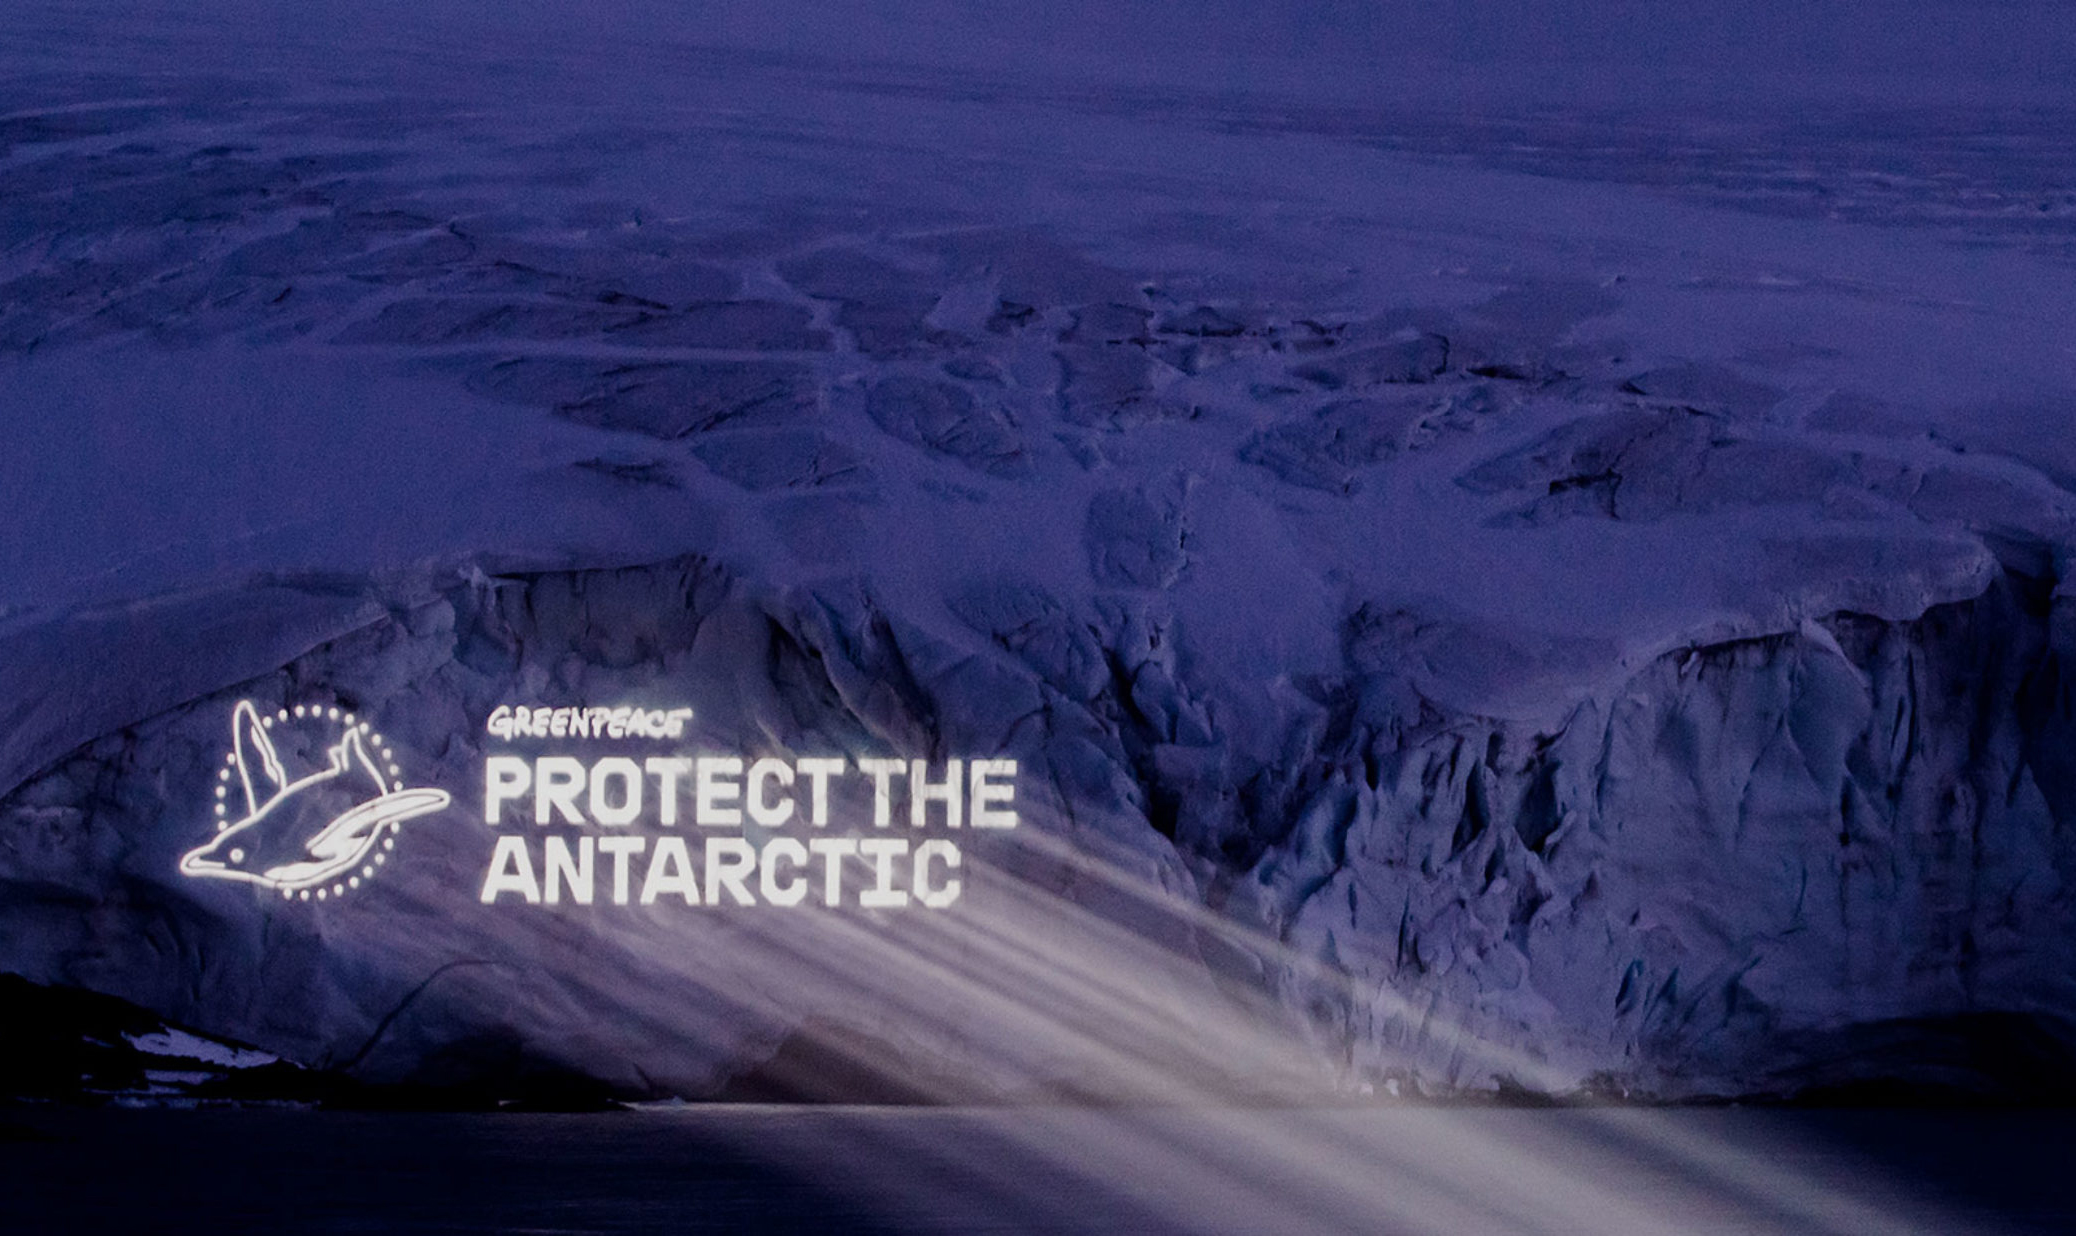 Lovers-Greenpeace-Antarctic